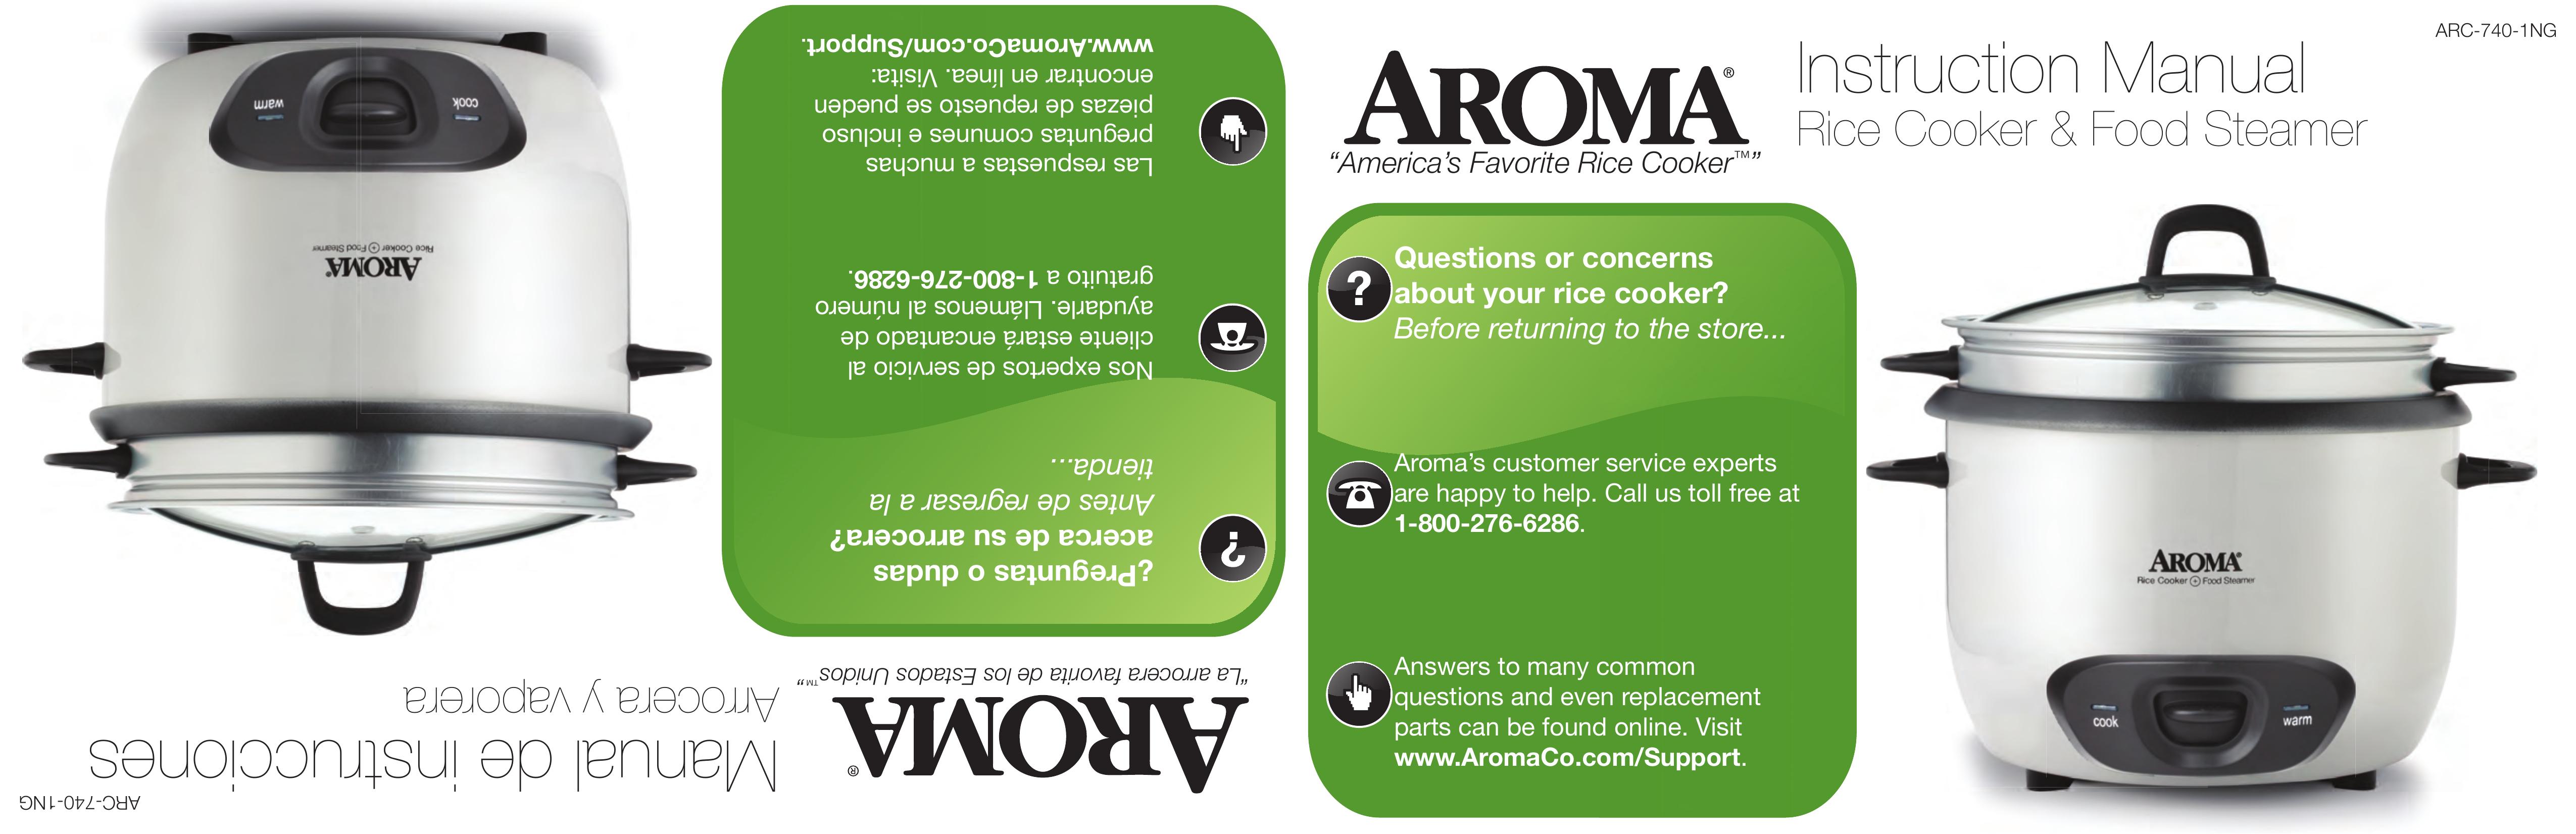 Aroma ARC-740-1NG Rice Cooker User Manual